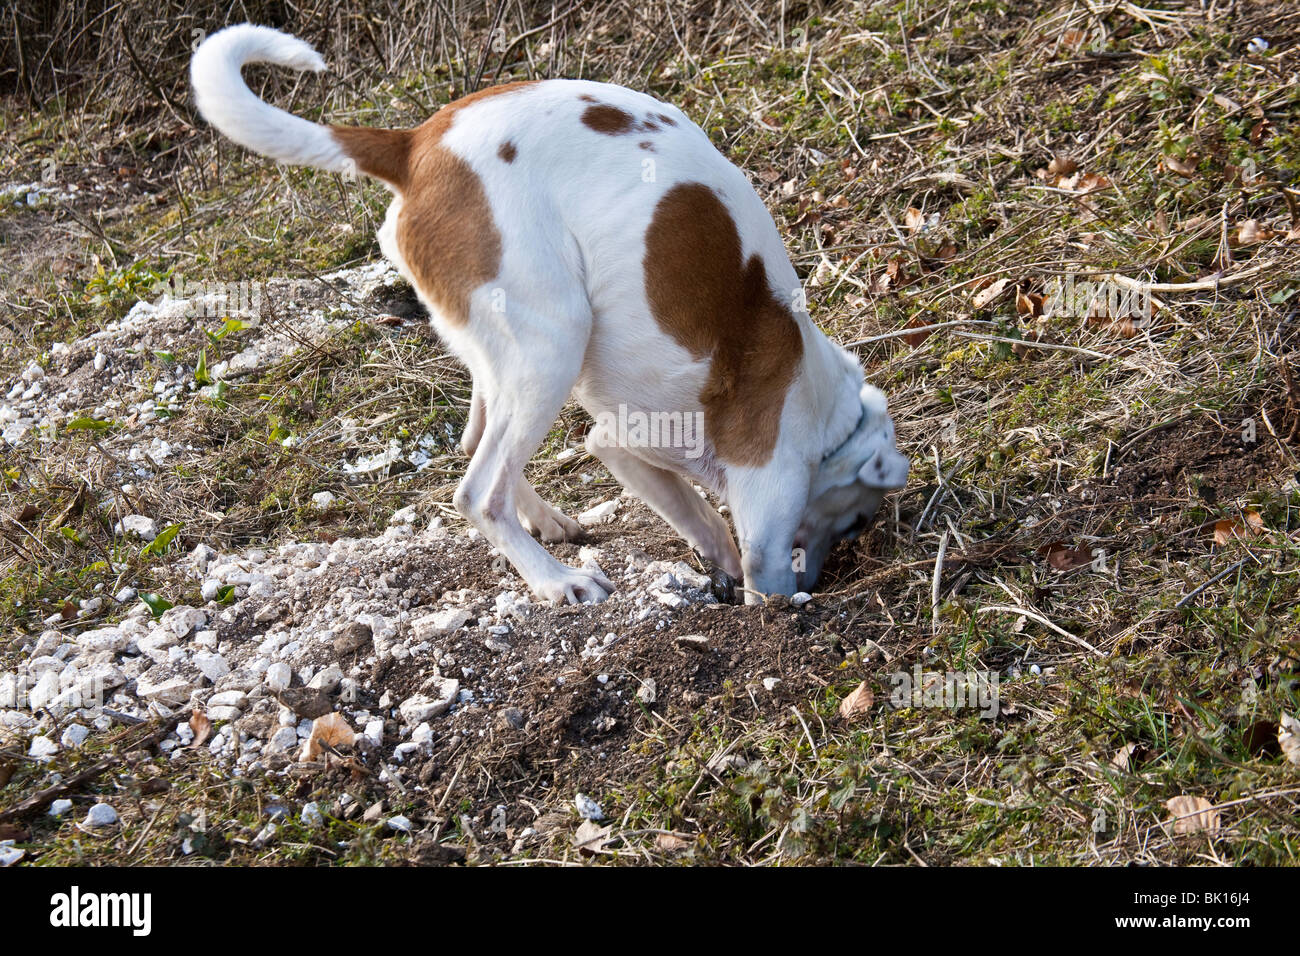 White and tan mongrel farmdog investigating a rabbit hole, Hampshire, England.  Stock Photo